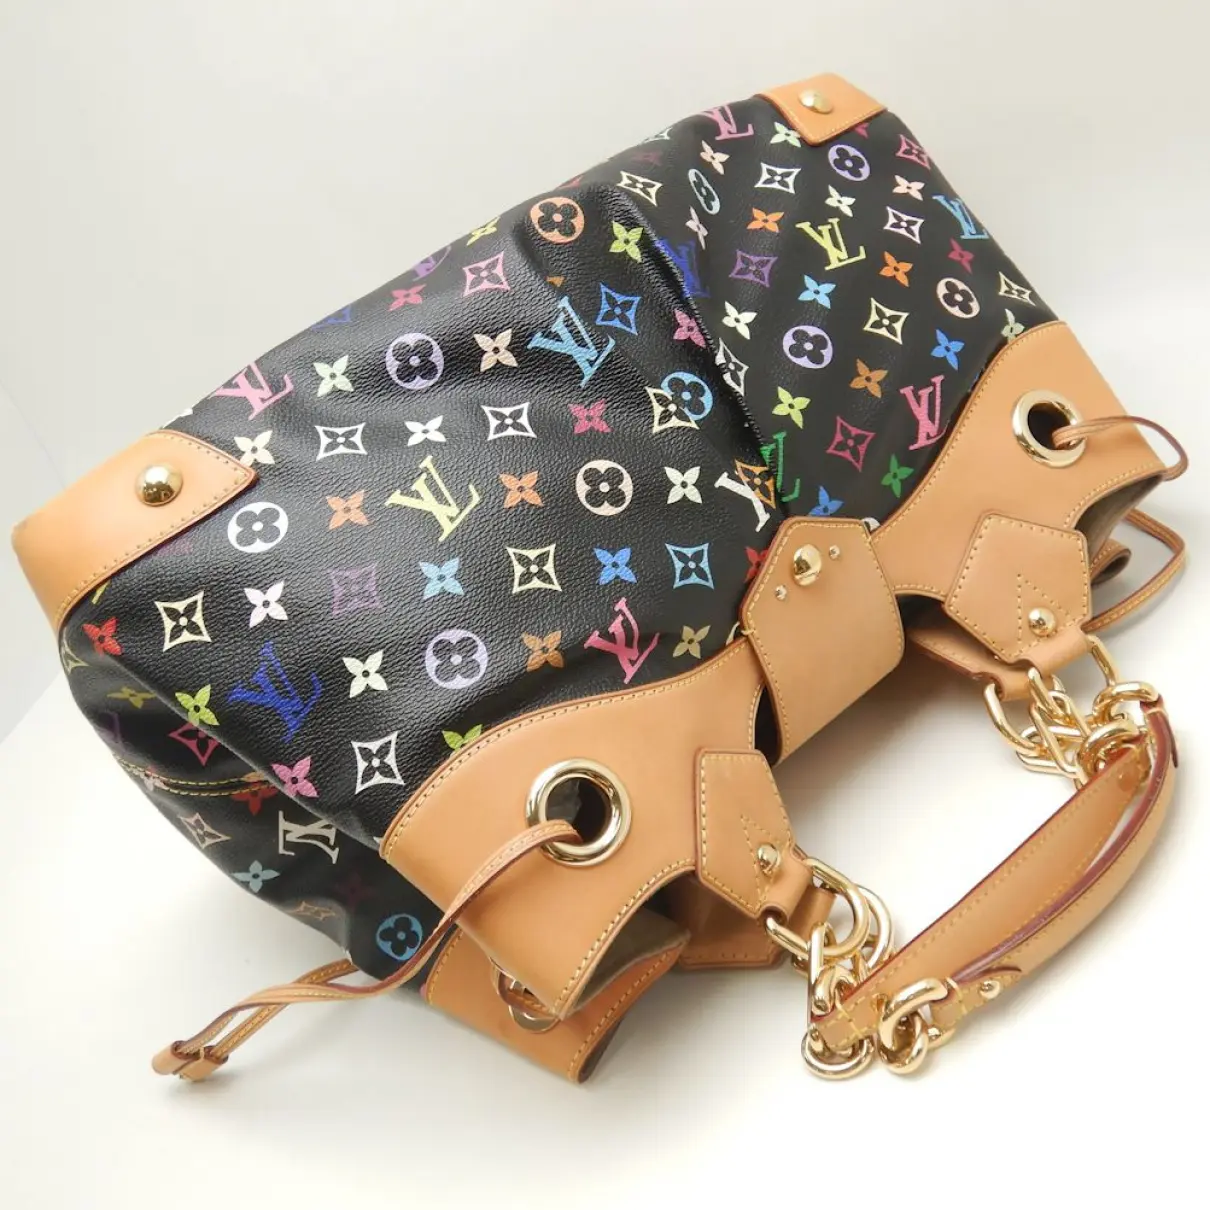 Buy Louis Vuitton Ursula leather handbag online